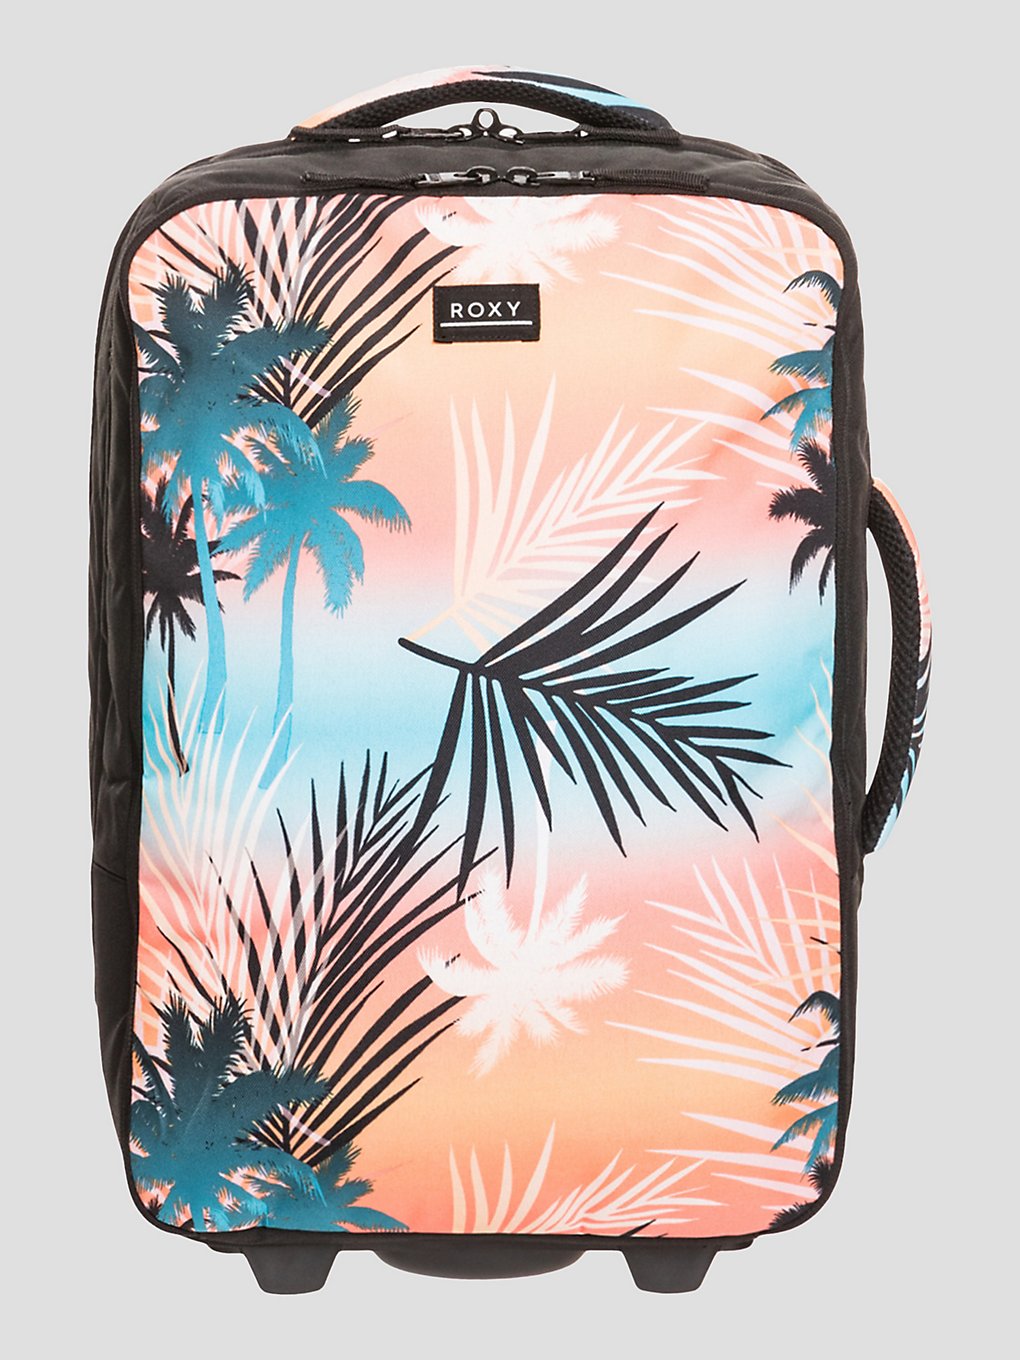 Roxy Get It Girl Travel Bag bachelor button plm beach kaufen